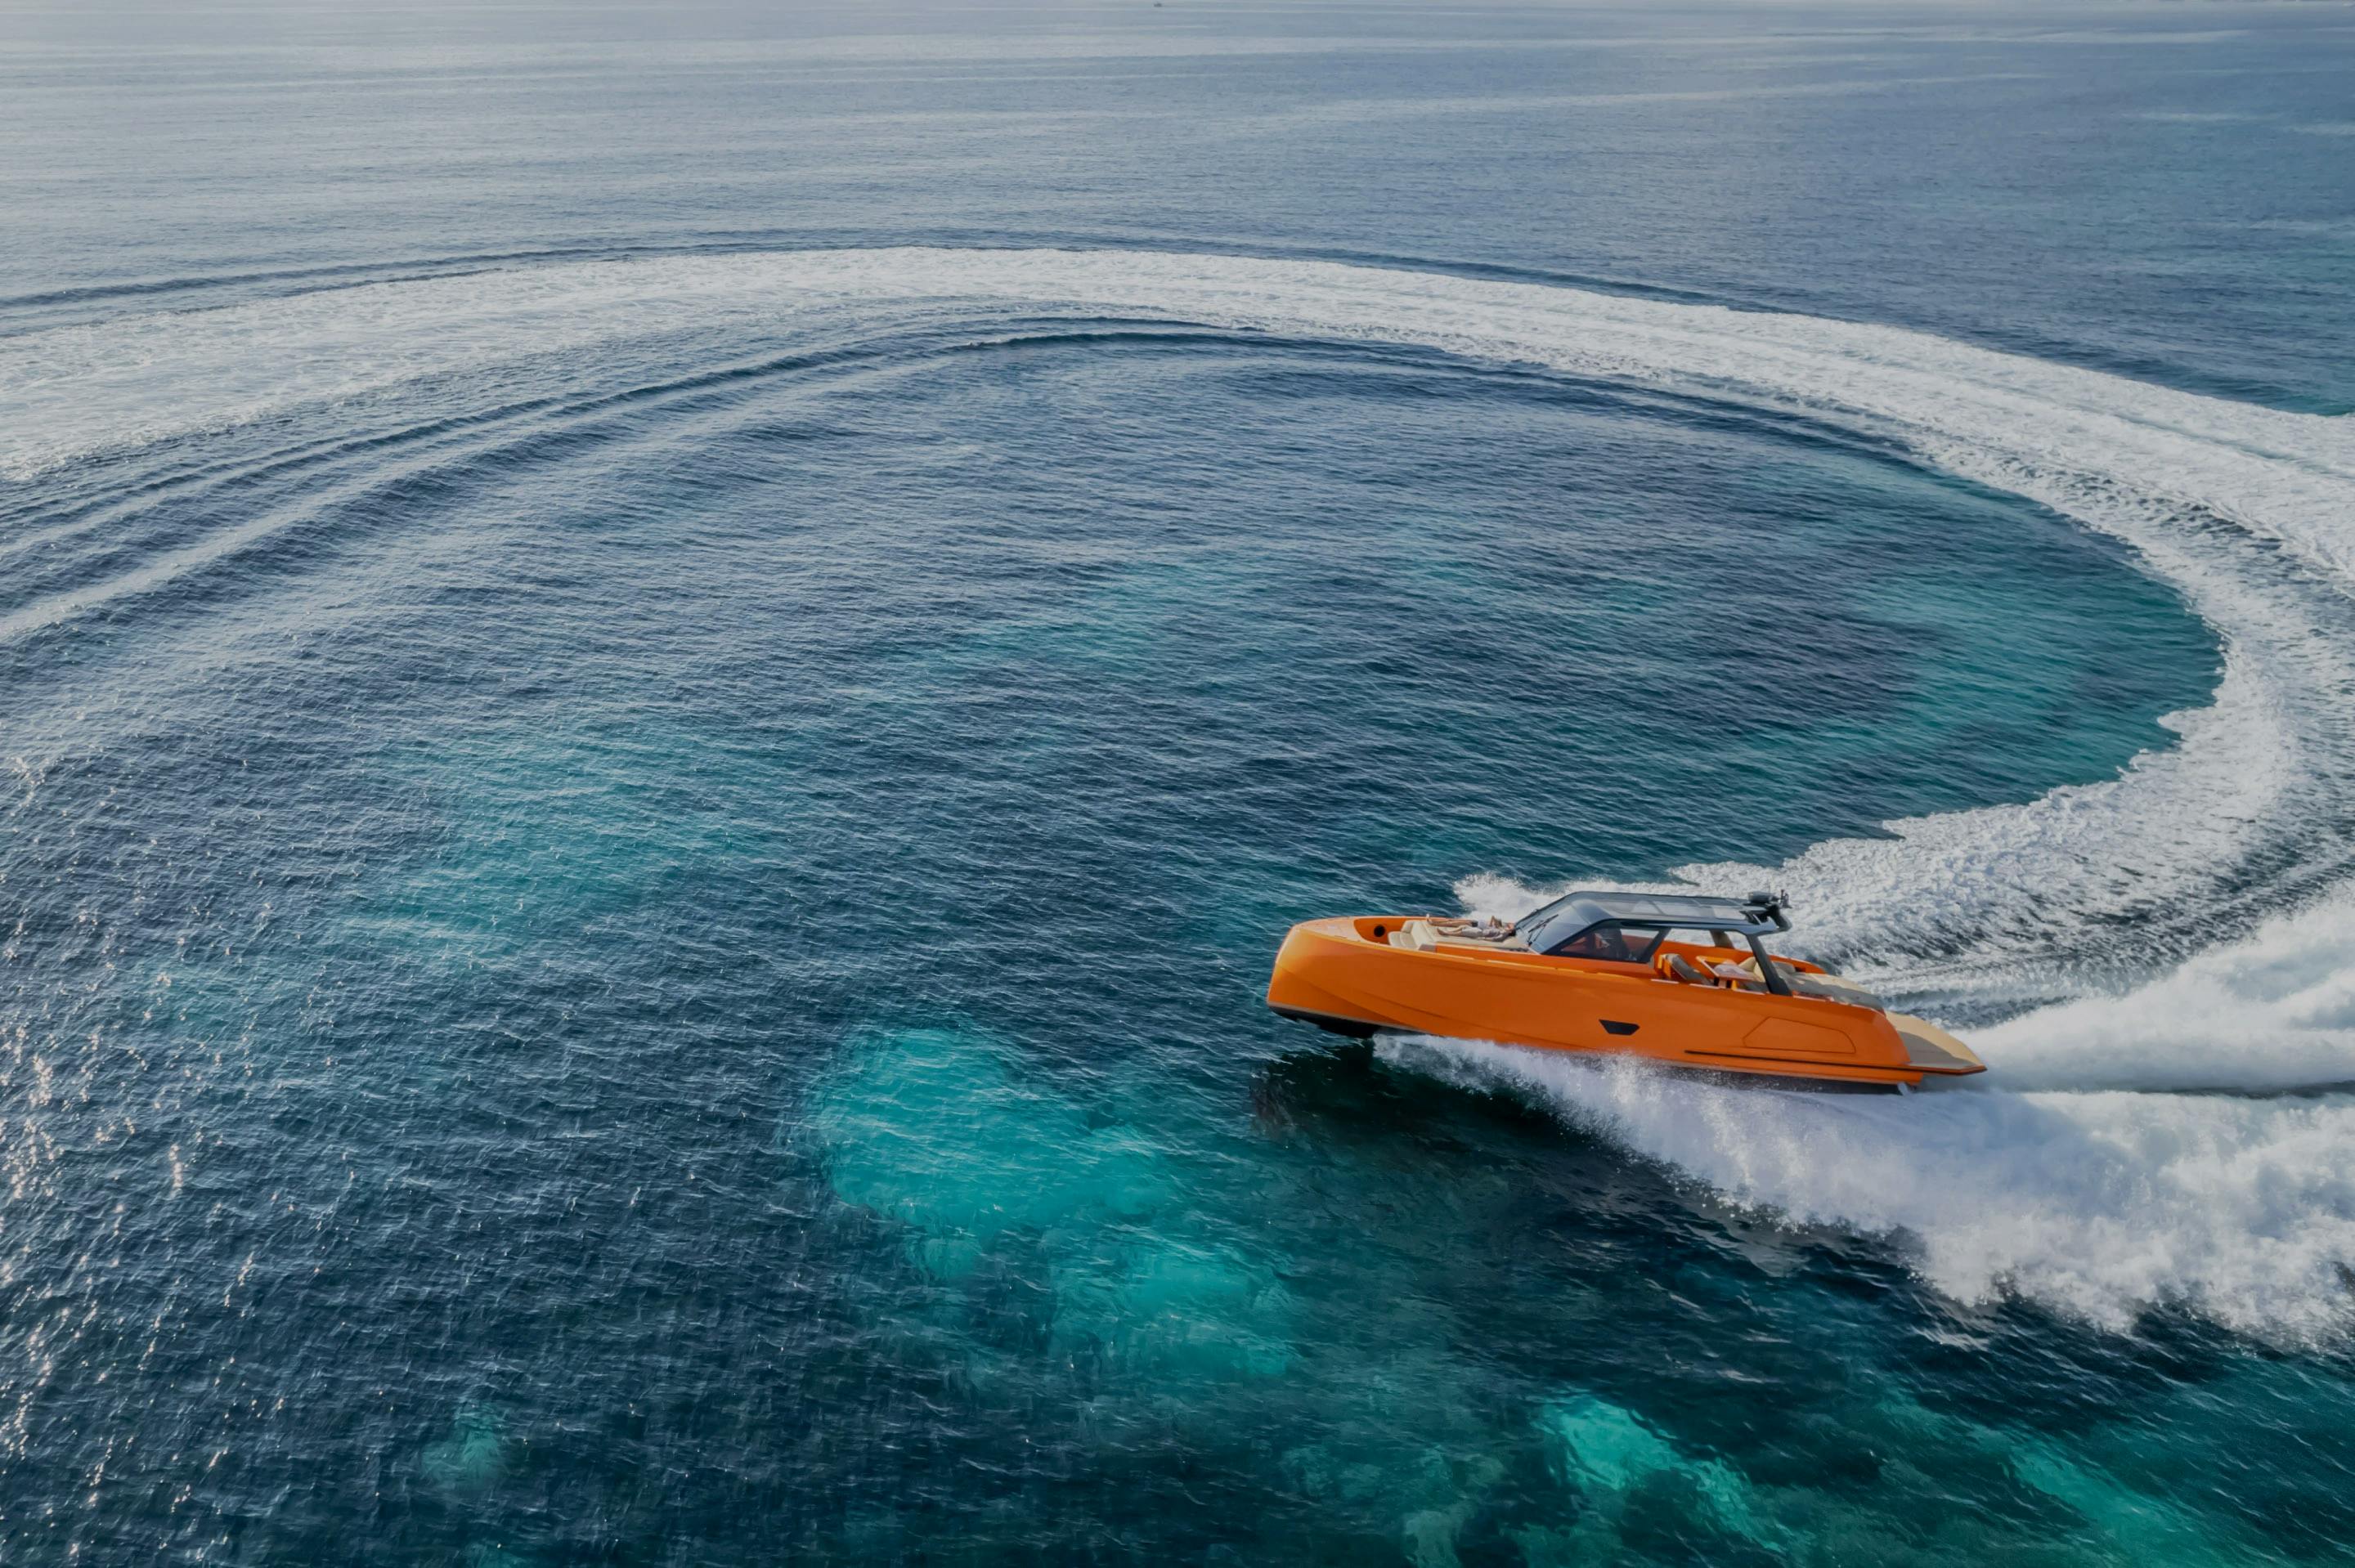 Vanquish Yacht Orange Yacht making donuts in the sea